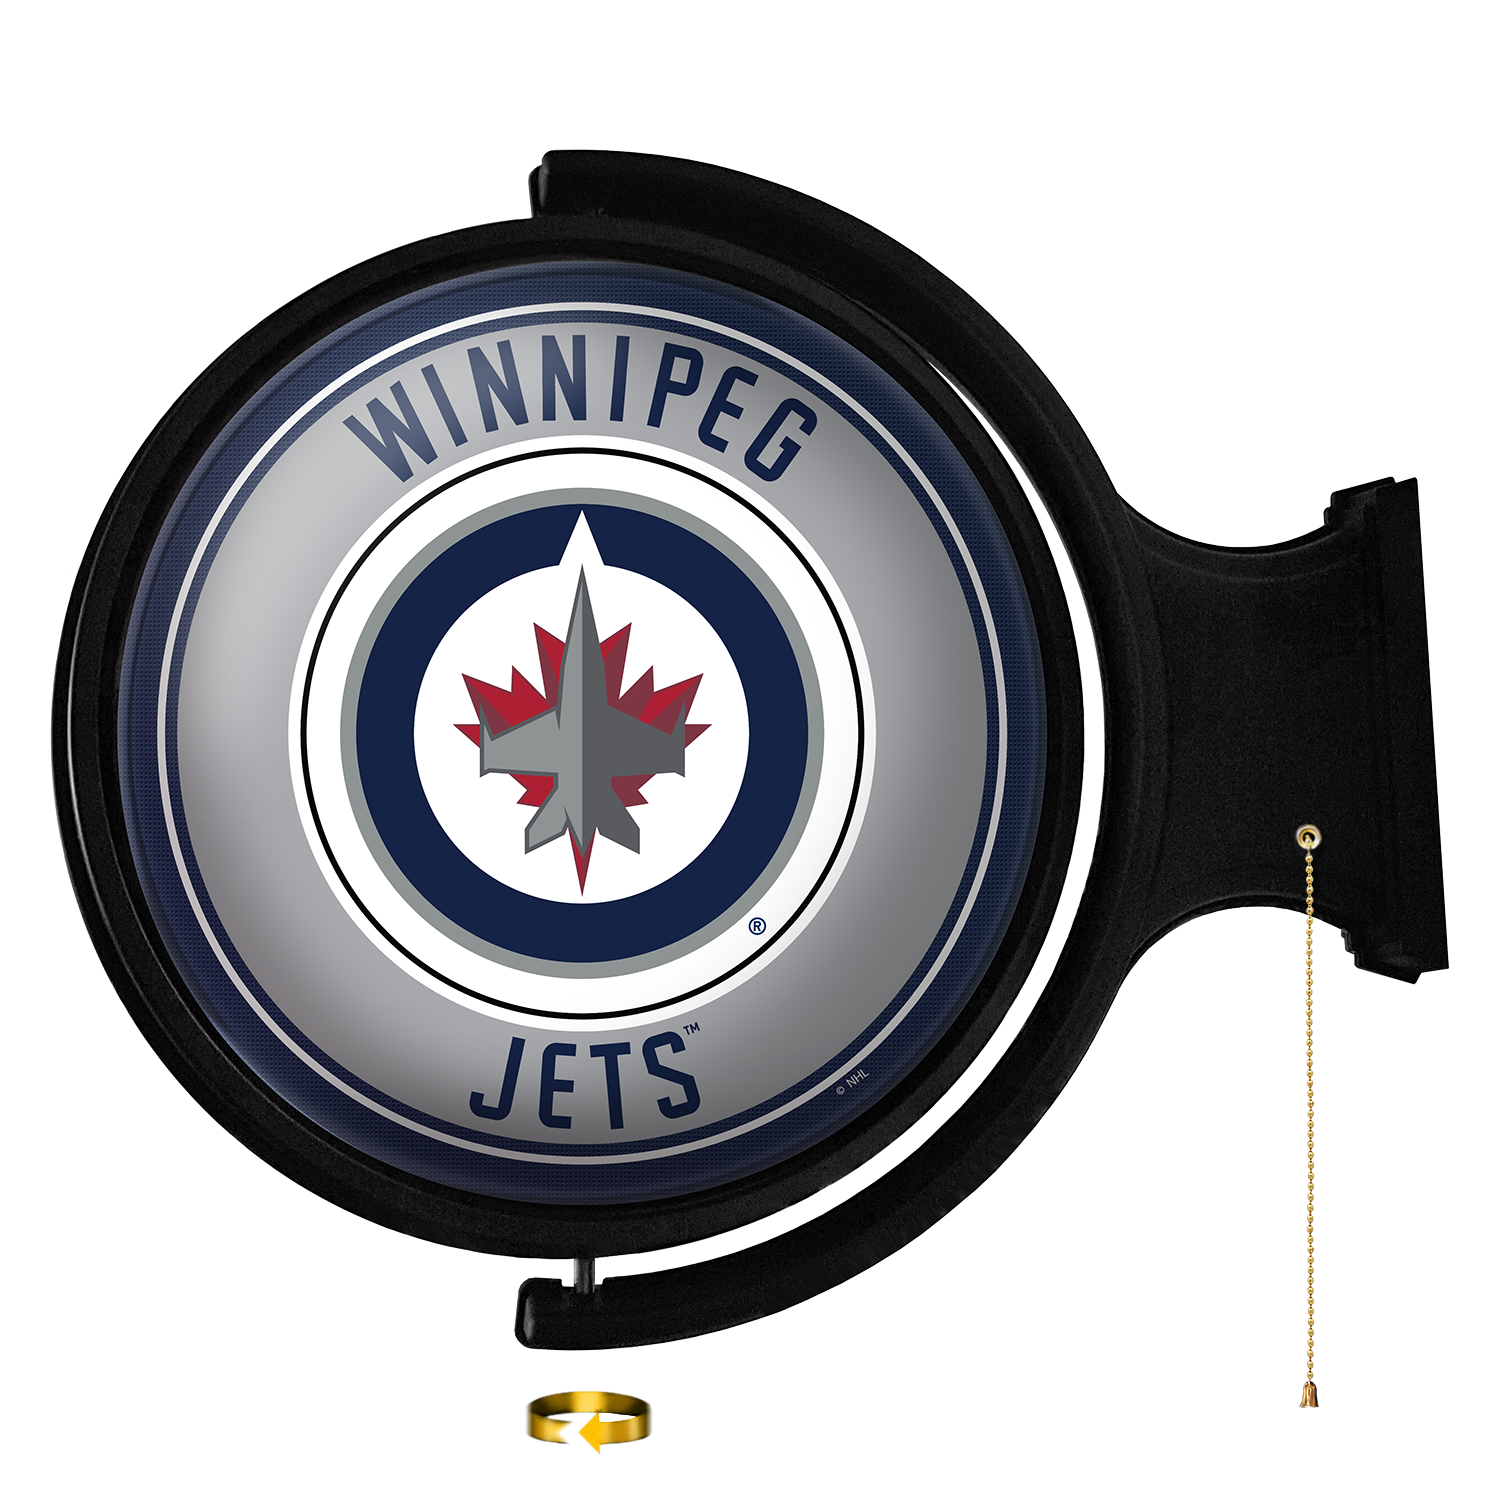 Winnipeg Jets Round Rotating Wall Sign